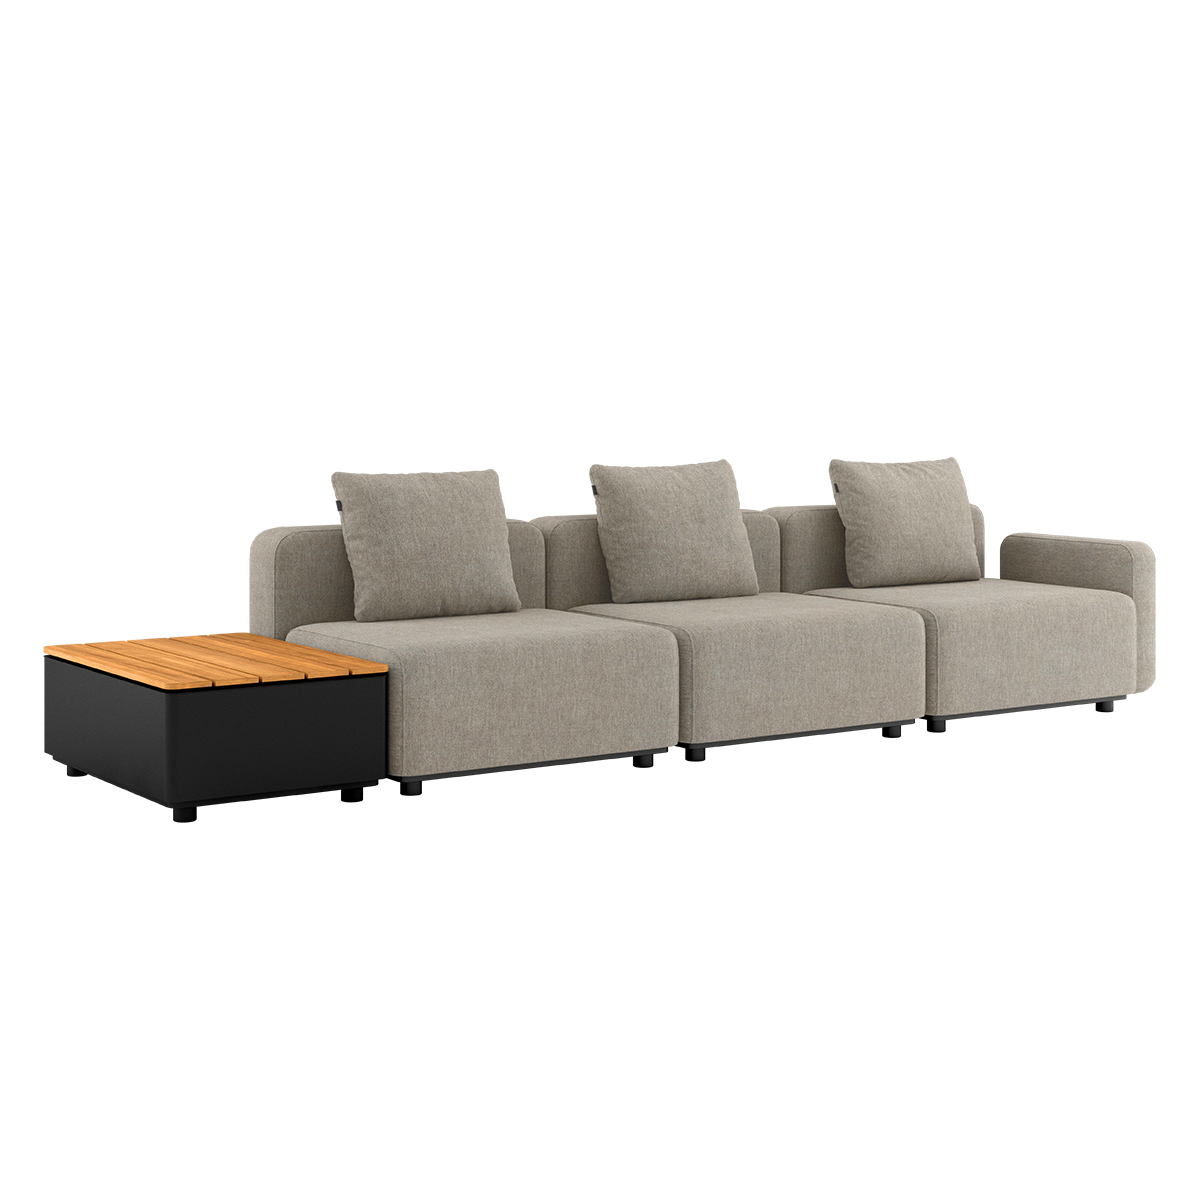 Cobana Lounge Sofa - 4 pers. w/ Patio Storage Table